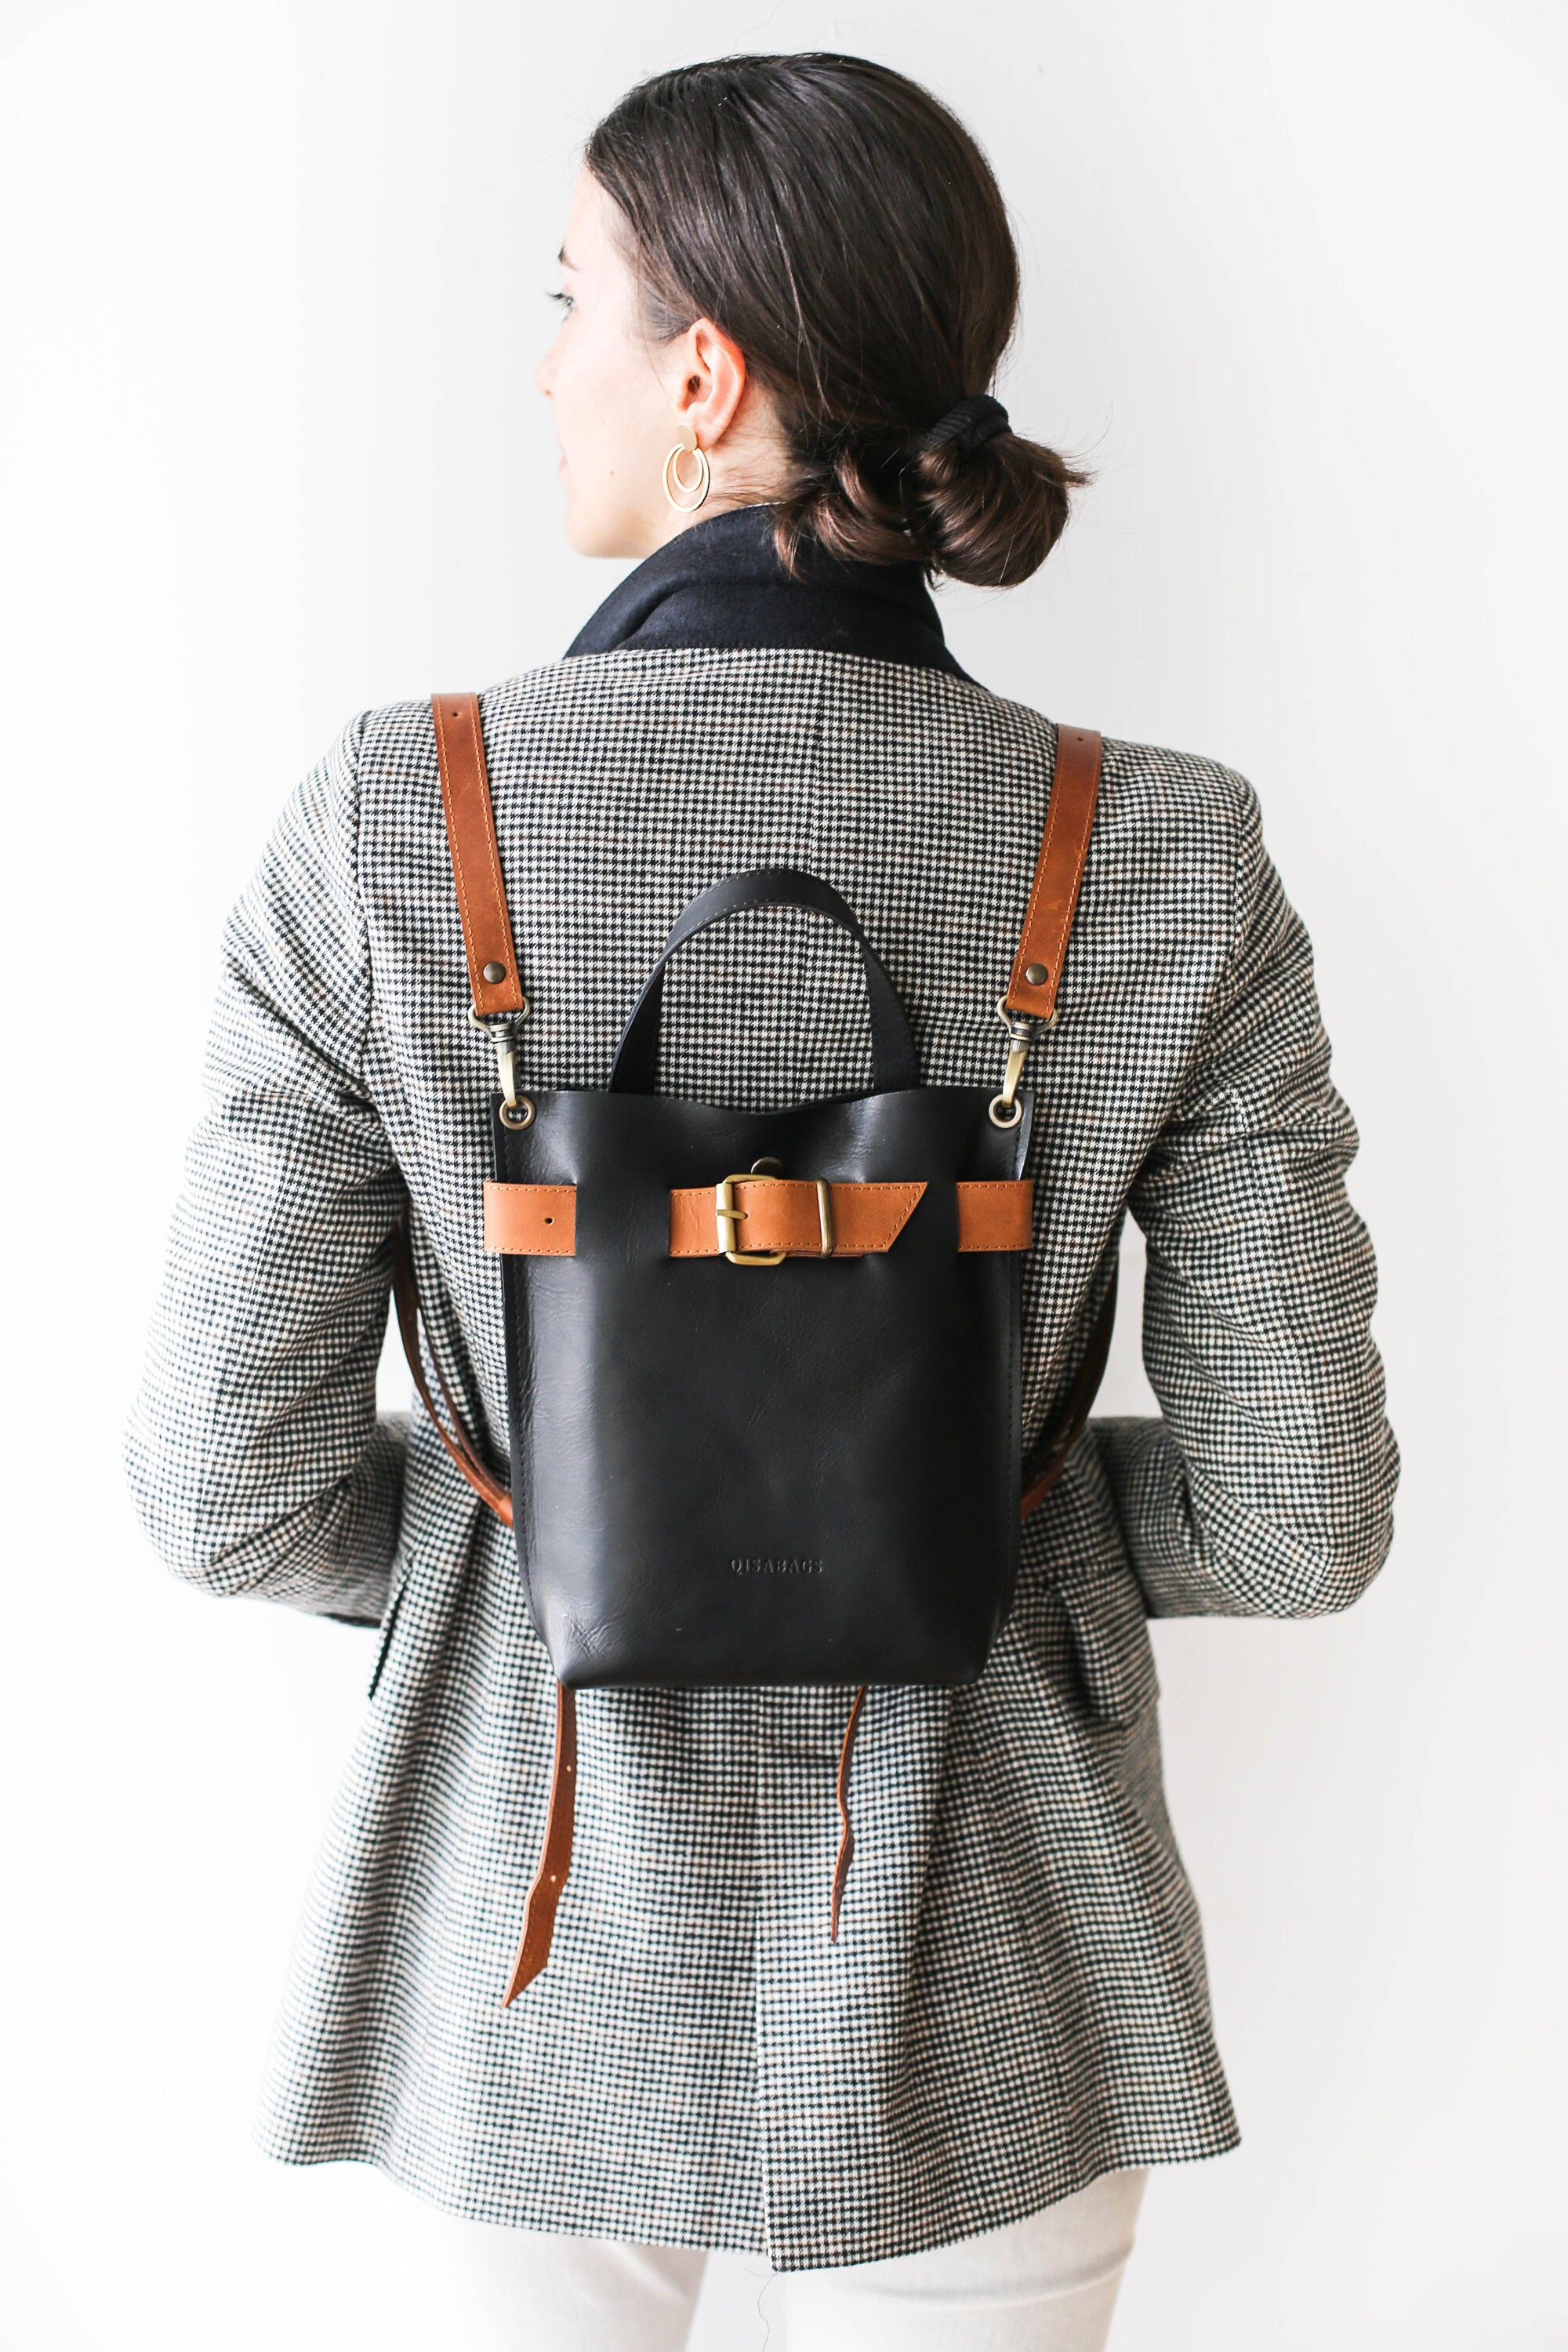 Mini leather Backpack Black Leather Backpack Backpack Purse | Etsy